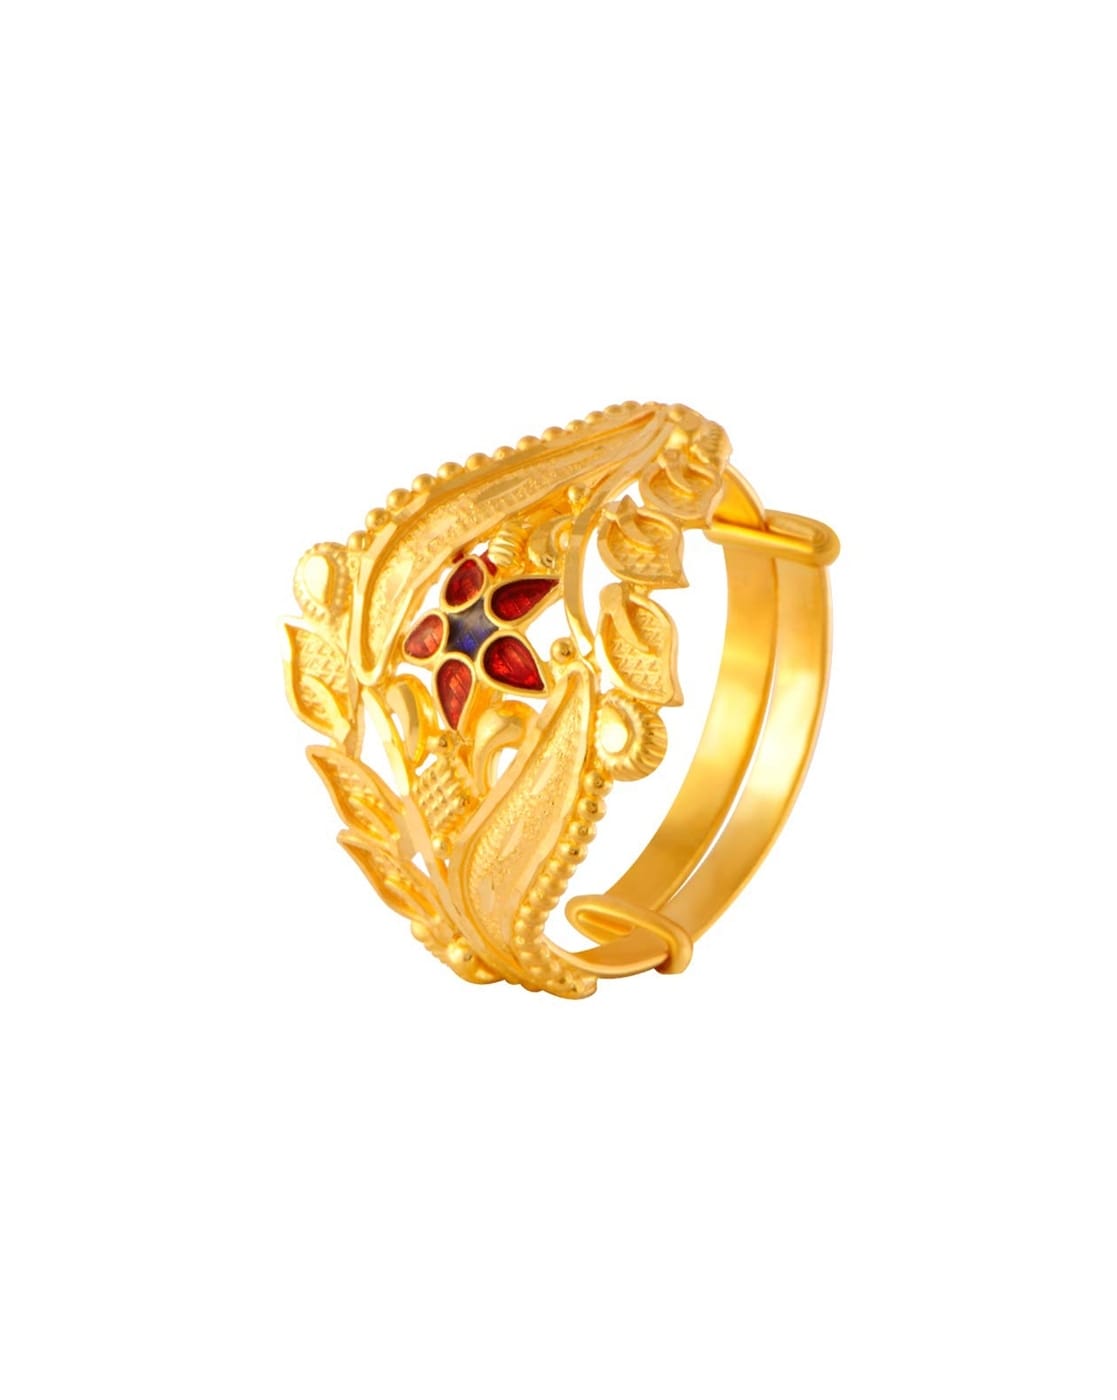 Jodha akbar nath #nath | Latest design gold bridal nose ring with weight @ jodha nath | By Gold jewelleryFacebook